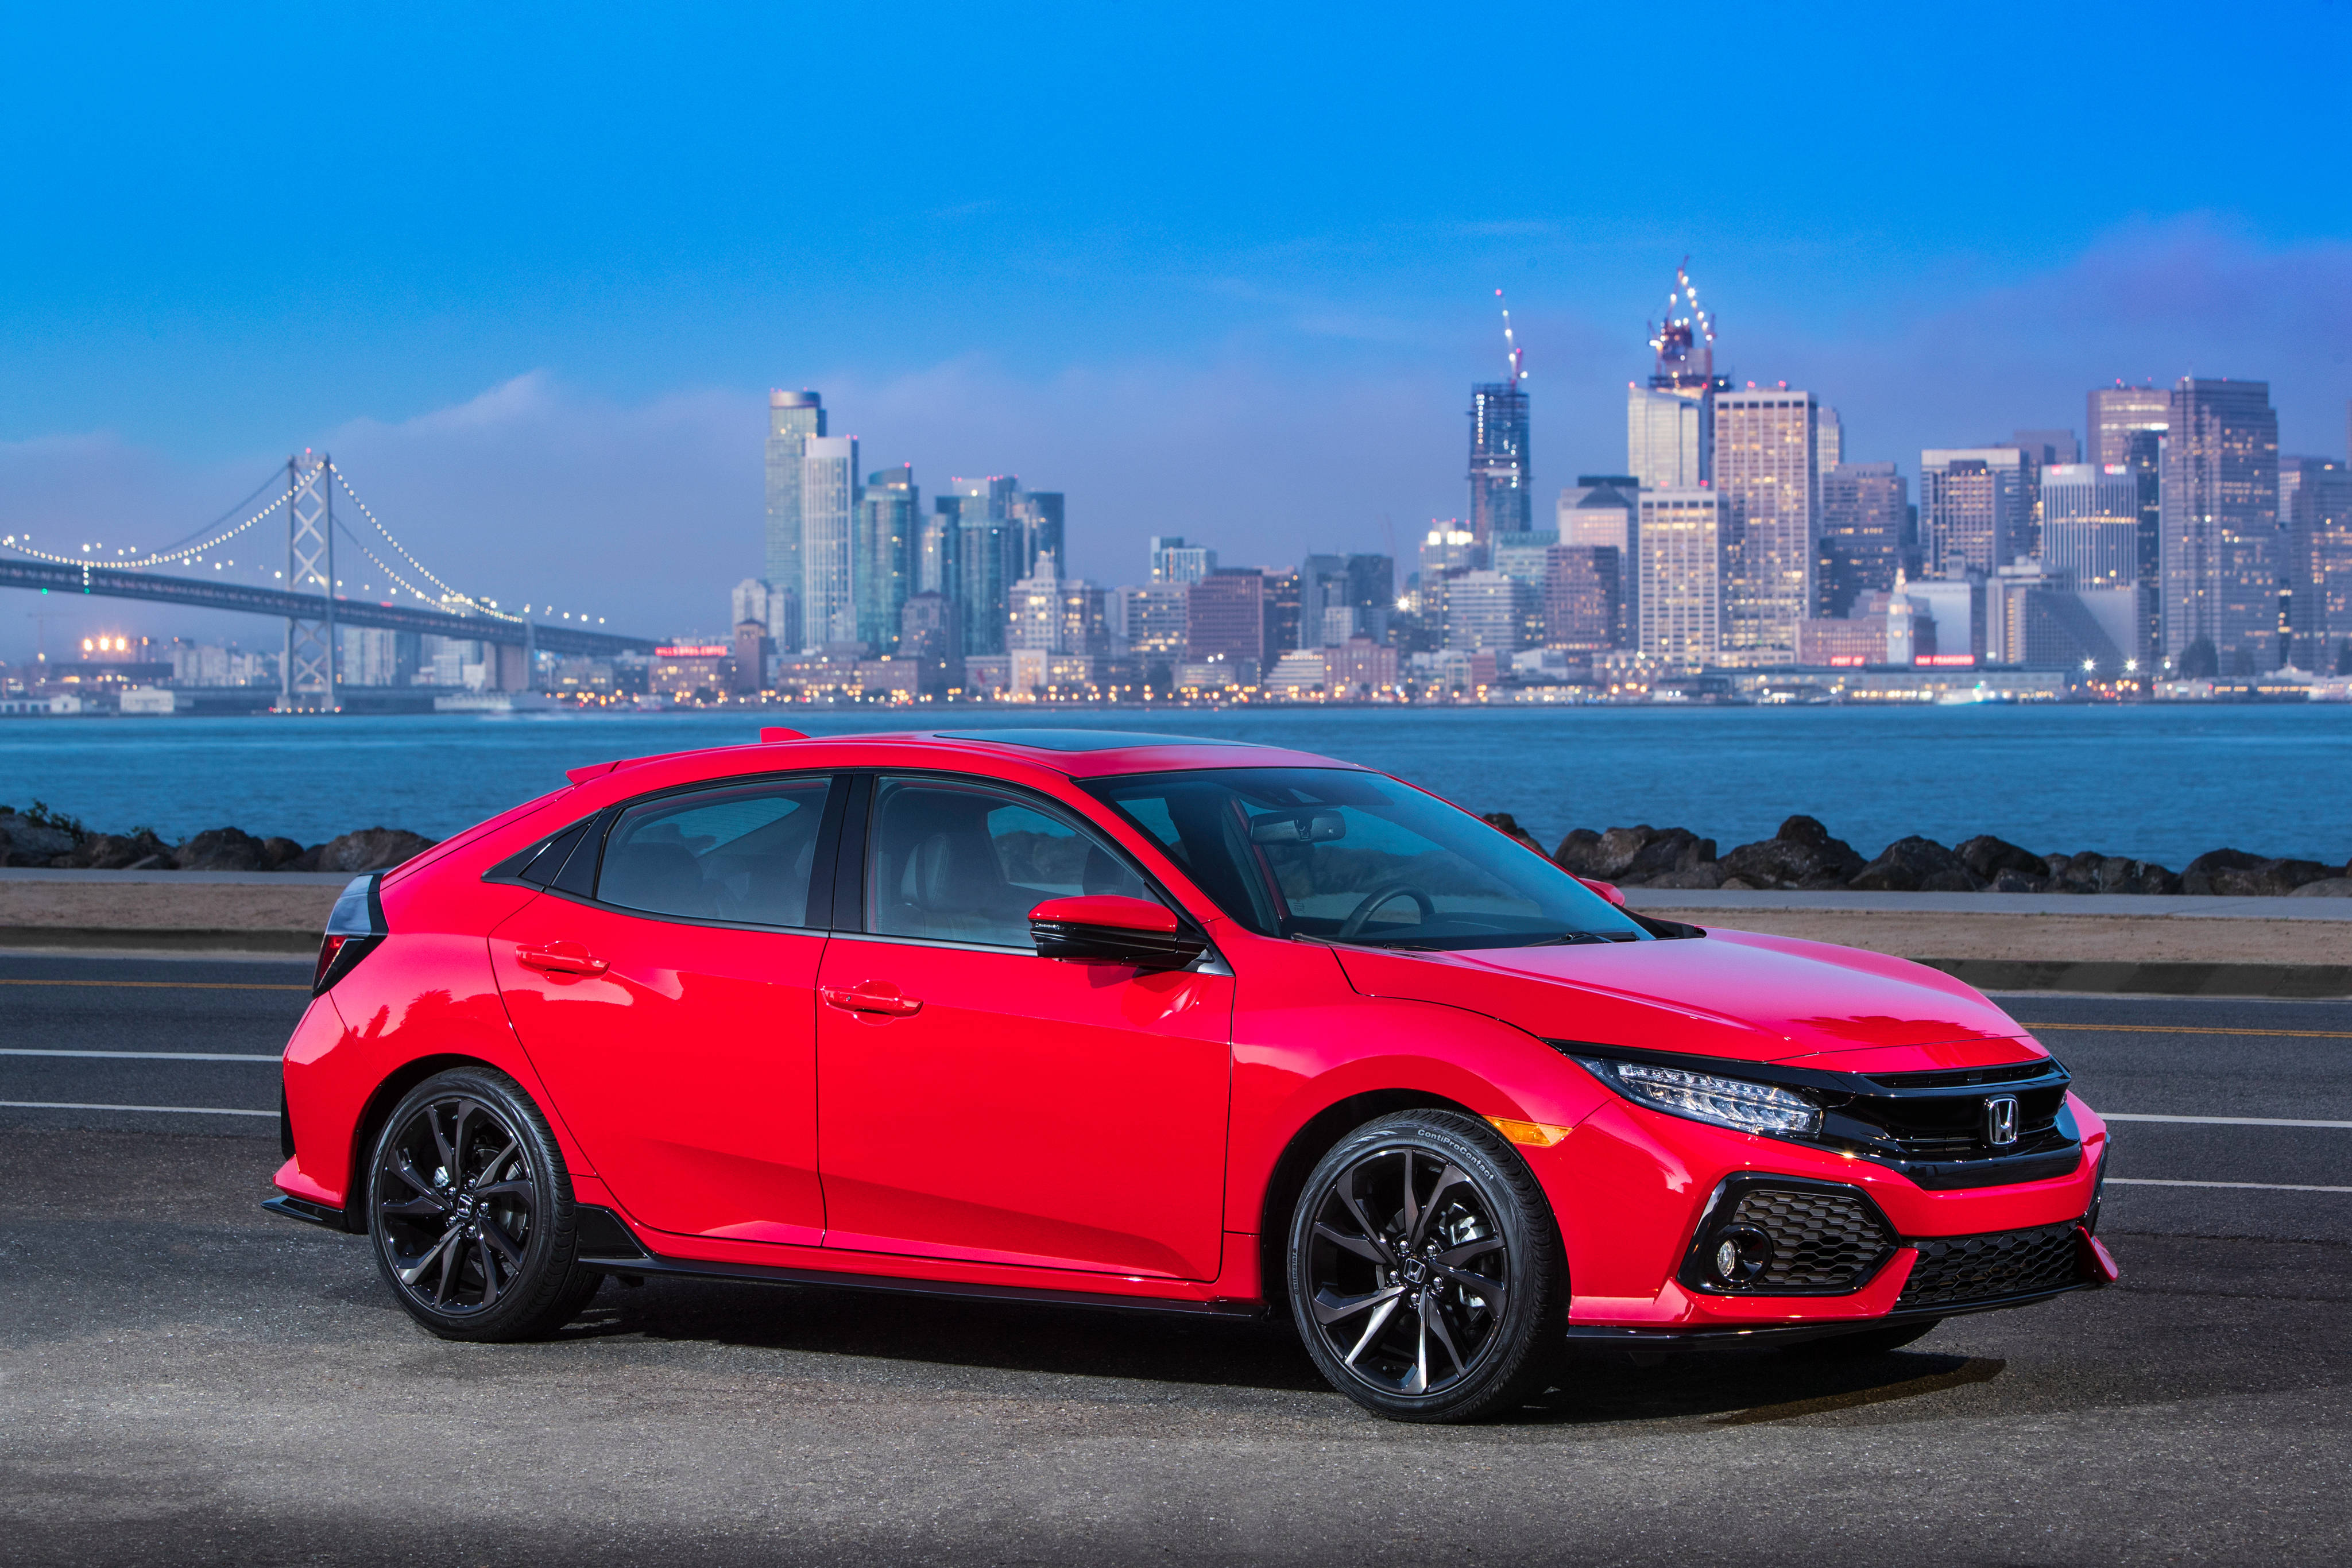 Download Red 4k Honda Civic City View Wallpaper 